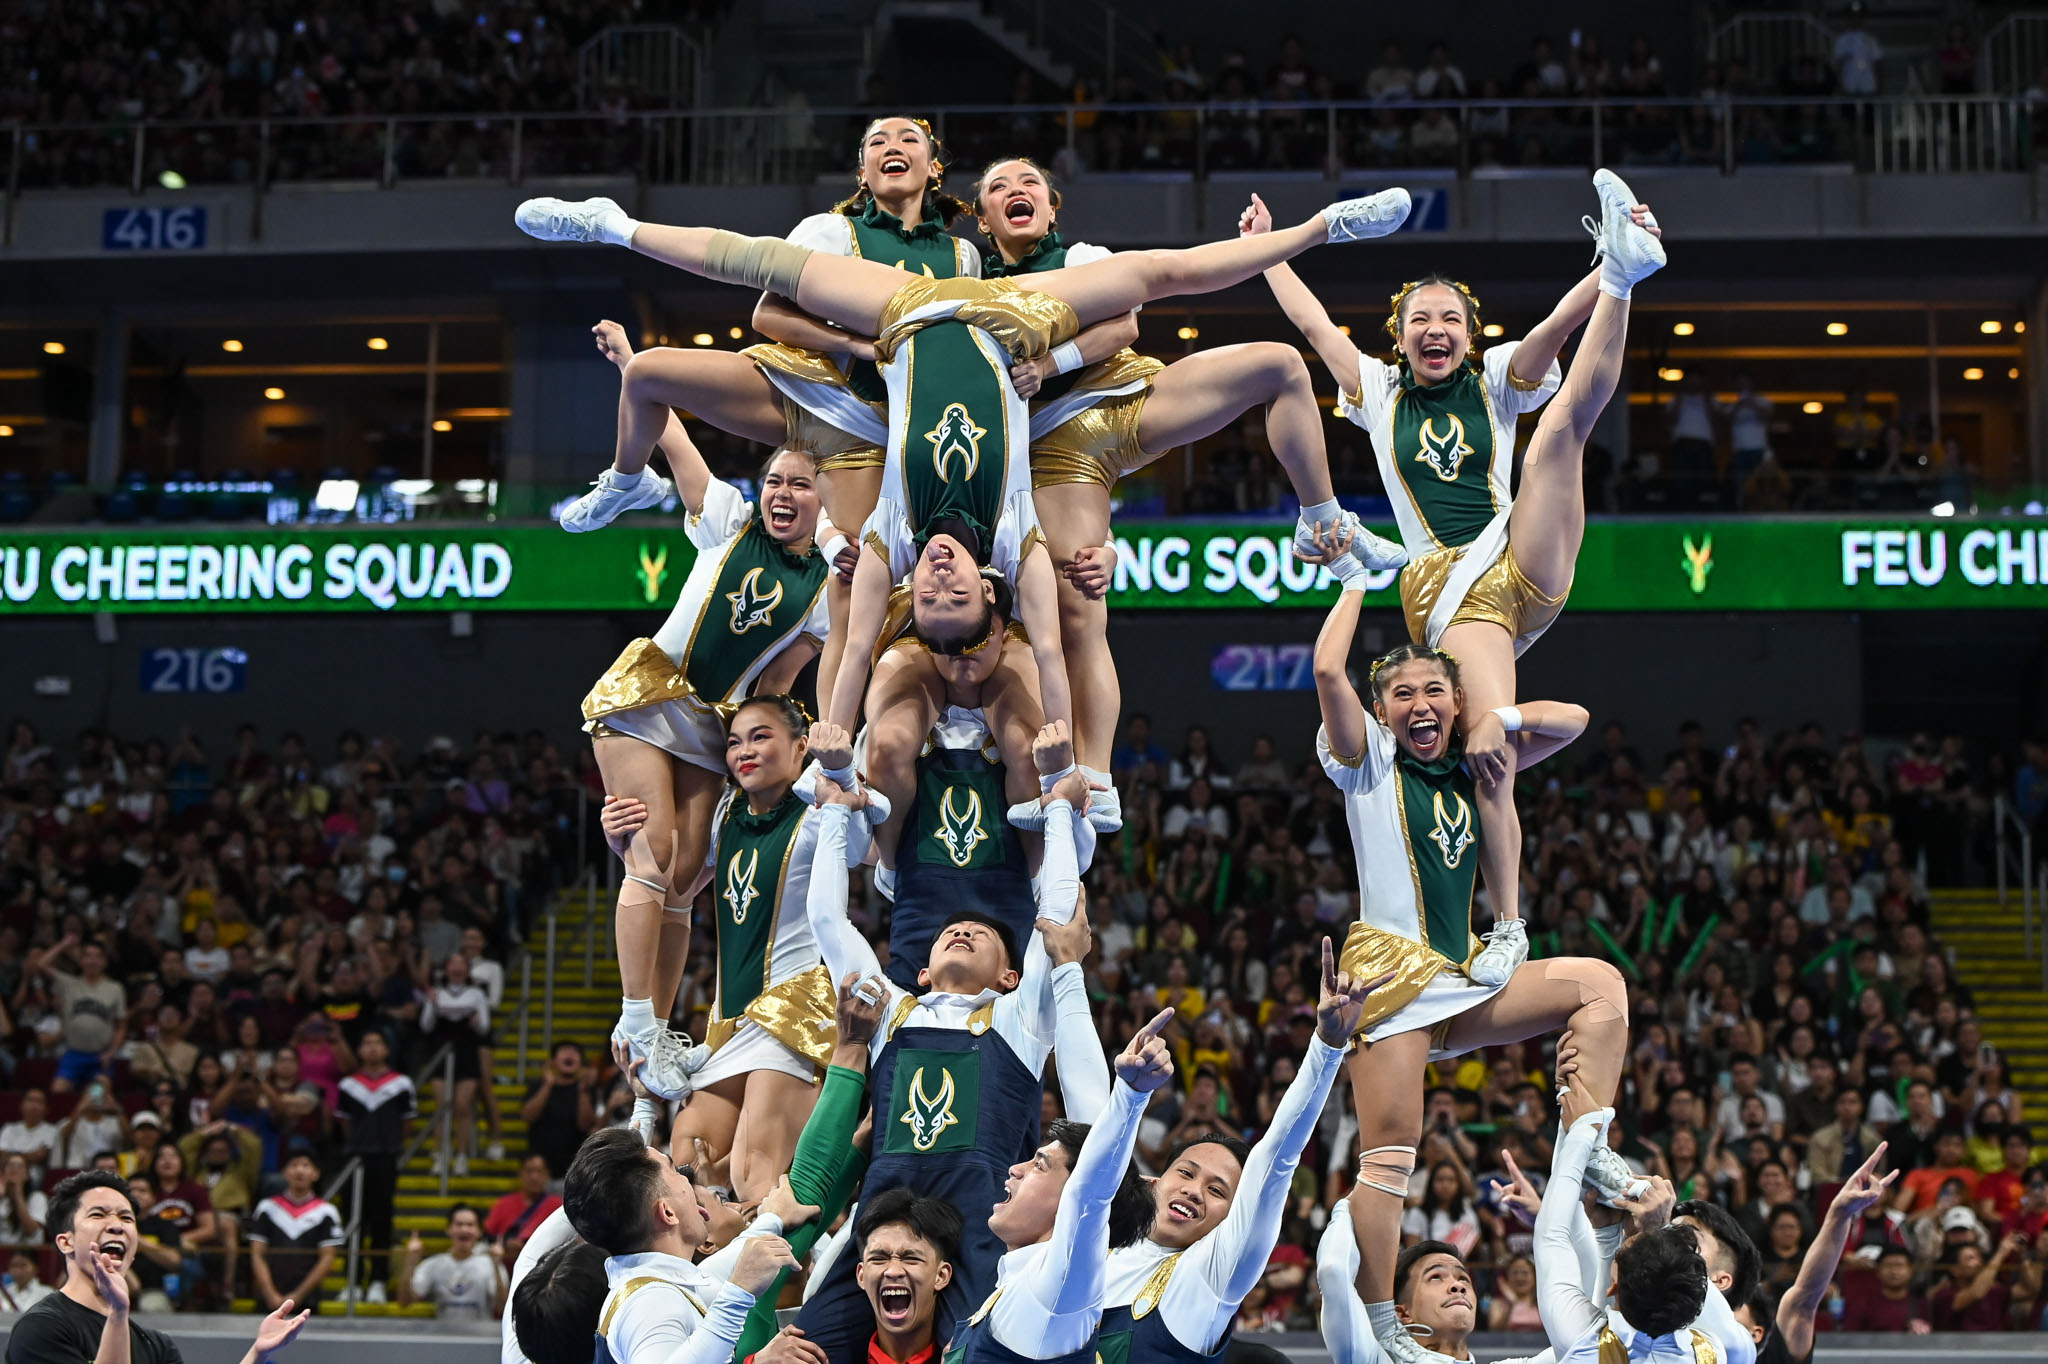 UAAP86-CDC-FEU-8926 FEU Cheering Squad celebrates full-scale victory, shatters 'bubble season' doubts Cheerleading FEU News UAAP  - philippine sports news